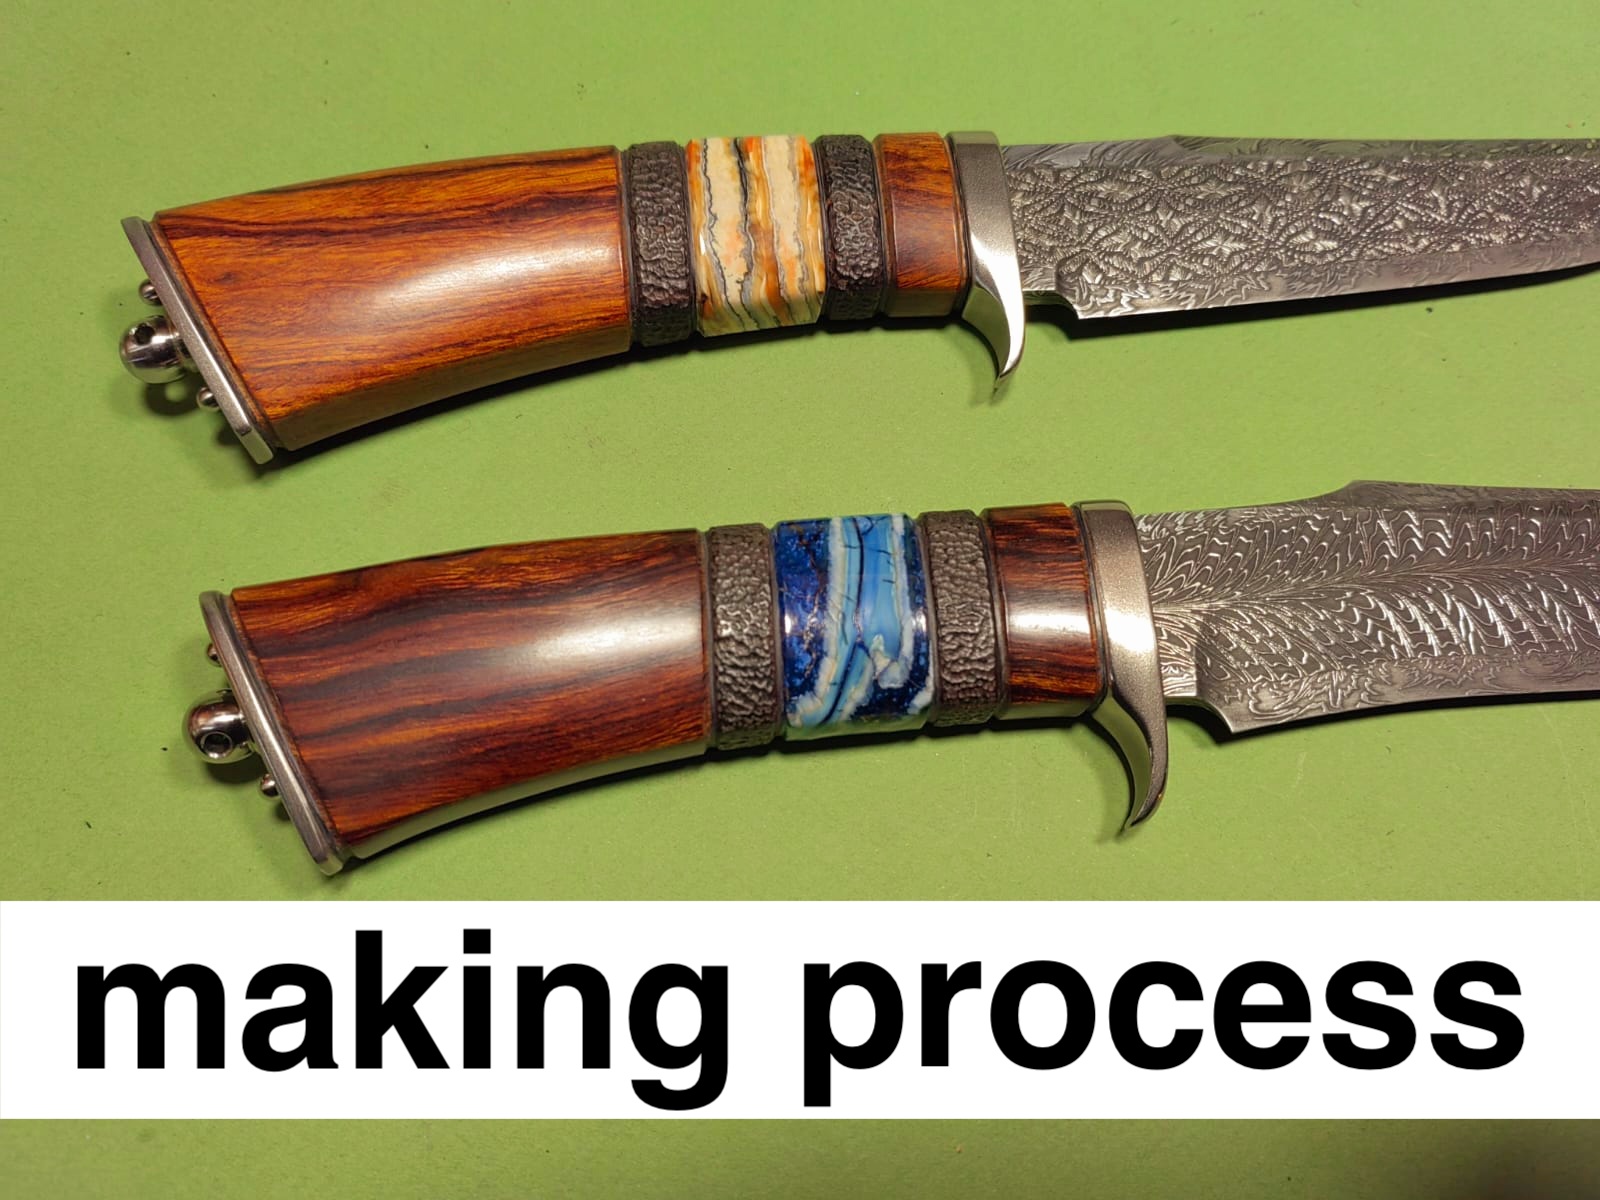 How to make custom knife handles